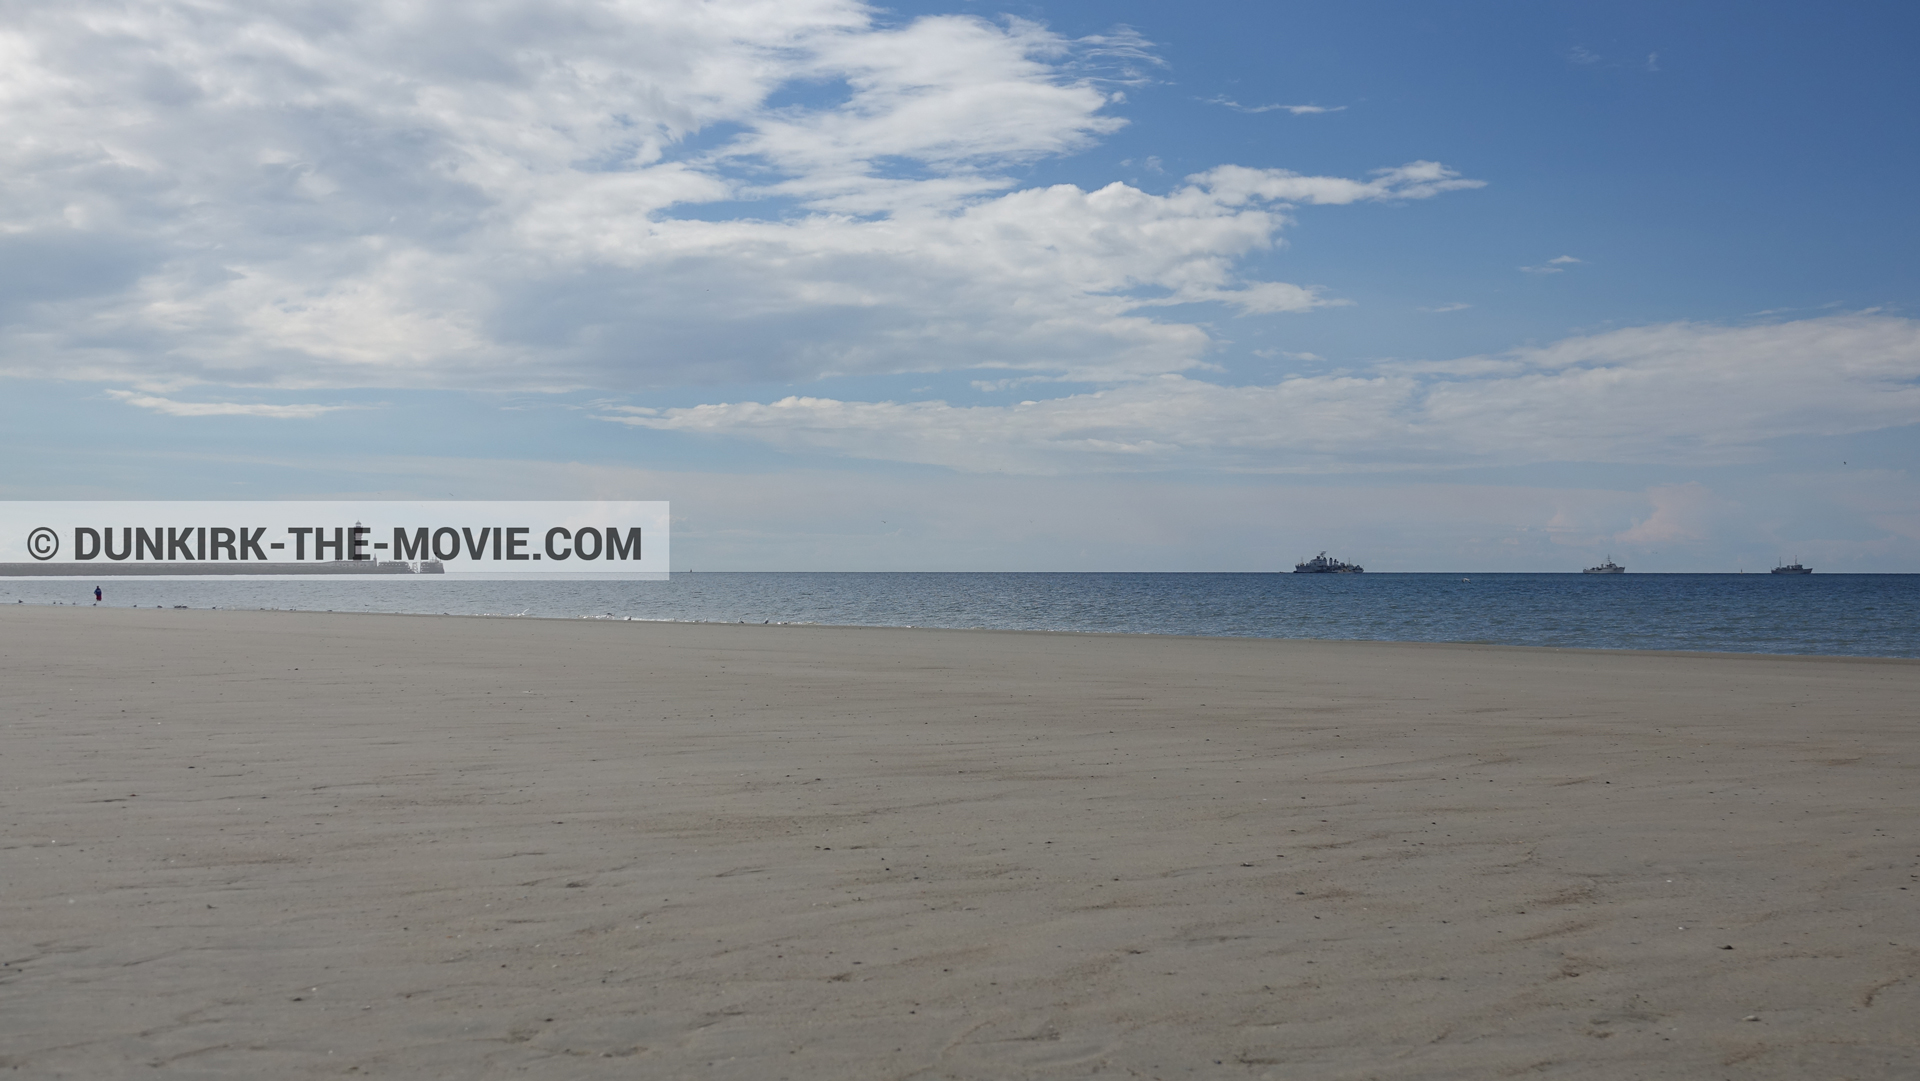 Fotos con barco, Maillé-Brézé - D36 - D54, faro de Saint-Pol-sur-Mer, playa,  durante el rodaje de la película Dunkerque de Nolan